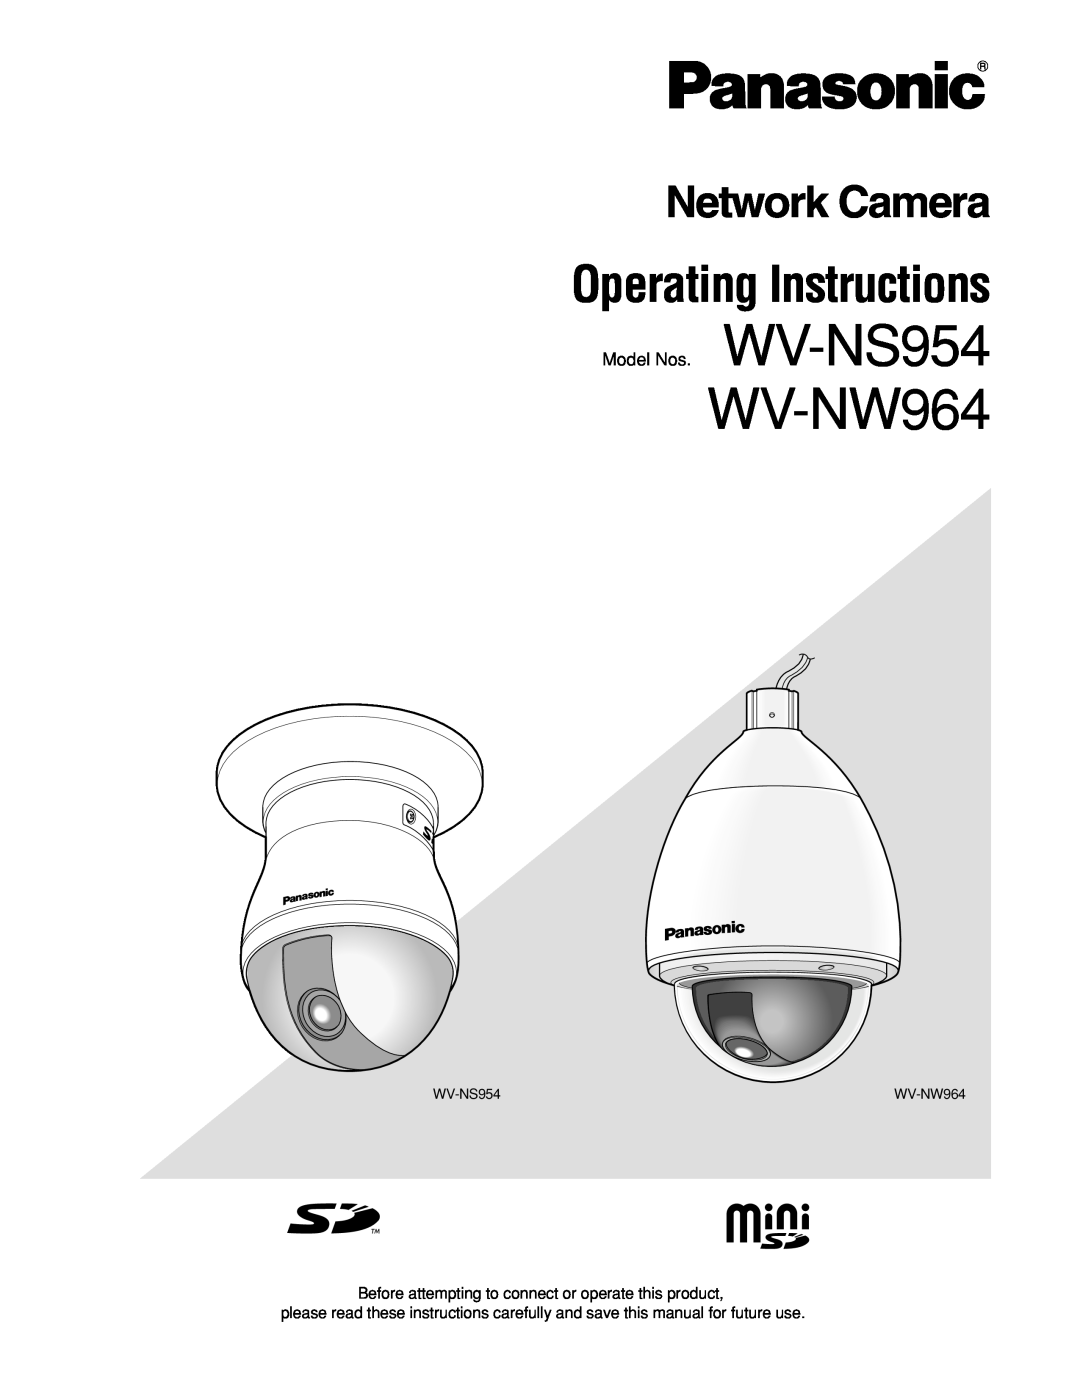 Panasonic WV-NS954 operating instructions WV-NW964, Operating Instructions, Network Camera 